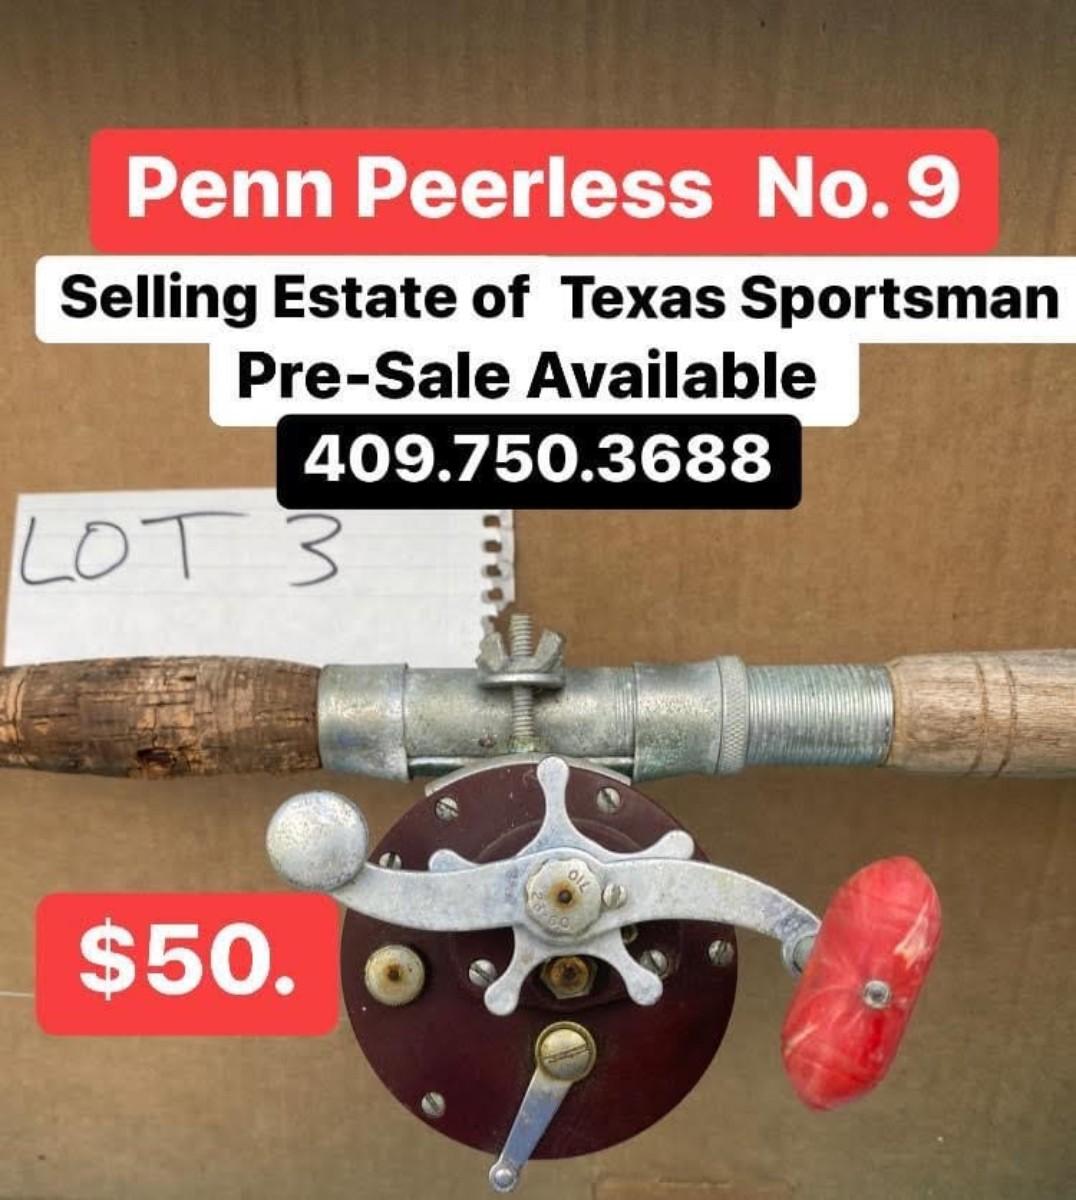 Penn Peerless No. 9 Made in USA Lot #3 used Fishing Gear